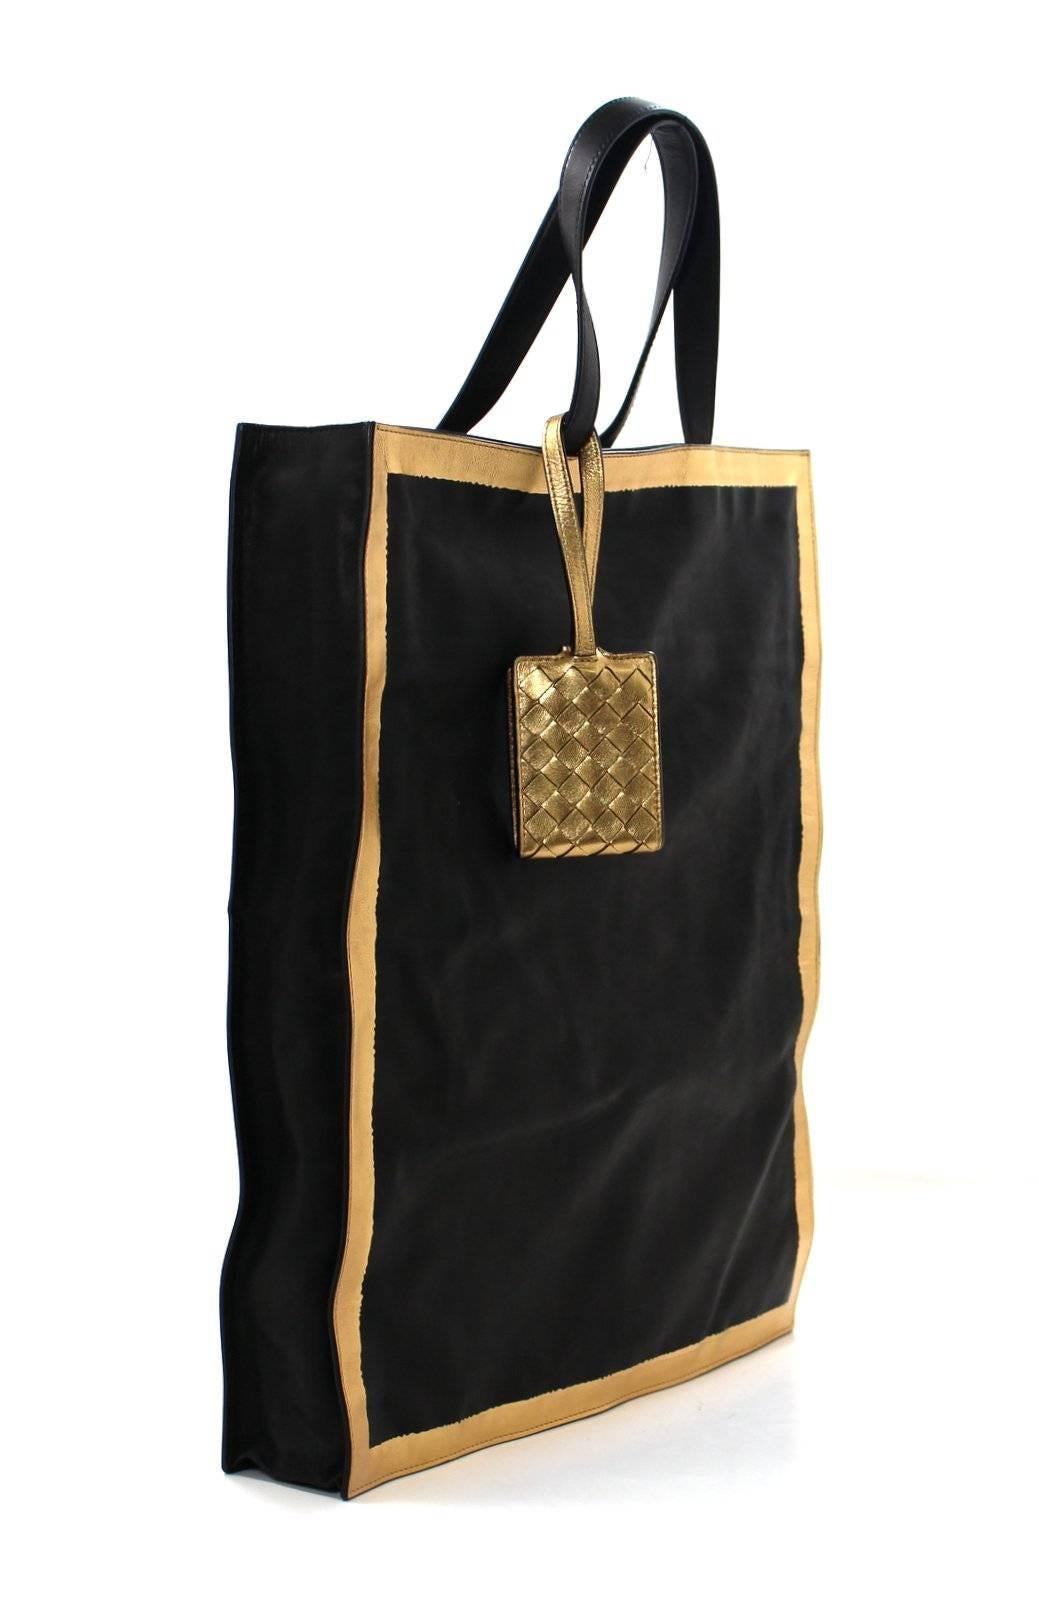 Bottega Veneta Black and Gold Leather Tote Bag In New Condition In New York City & Hamptons, NY